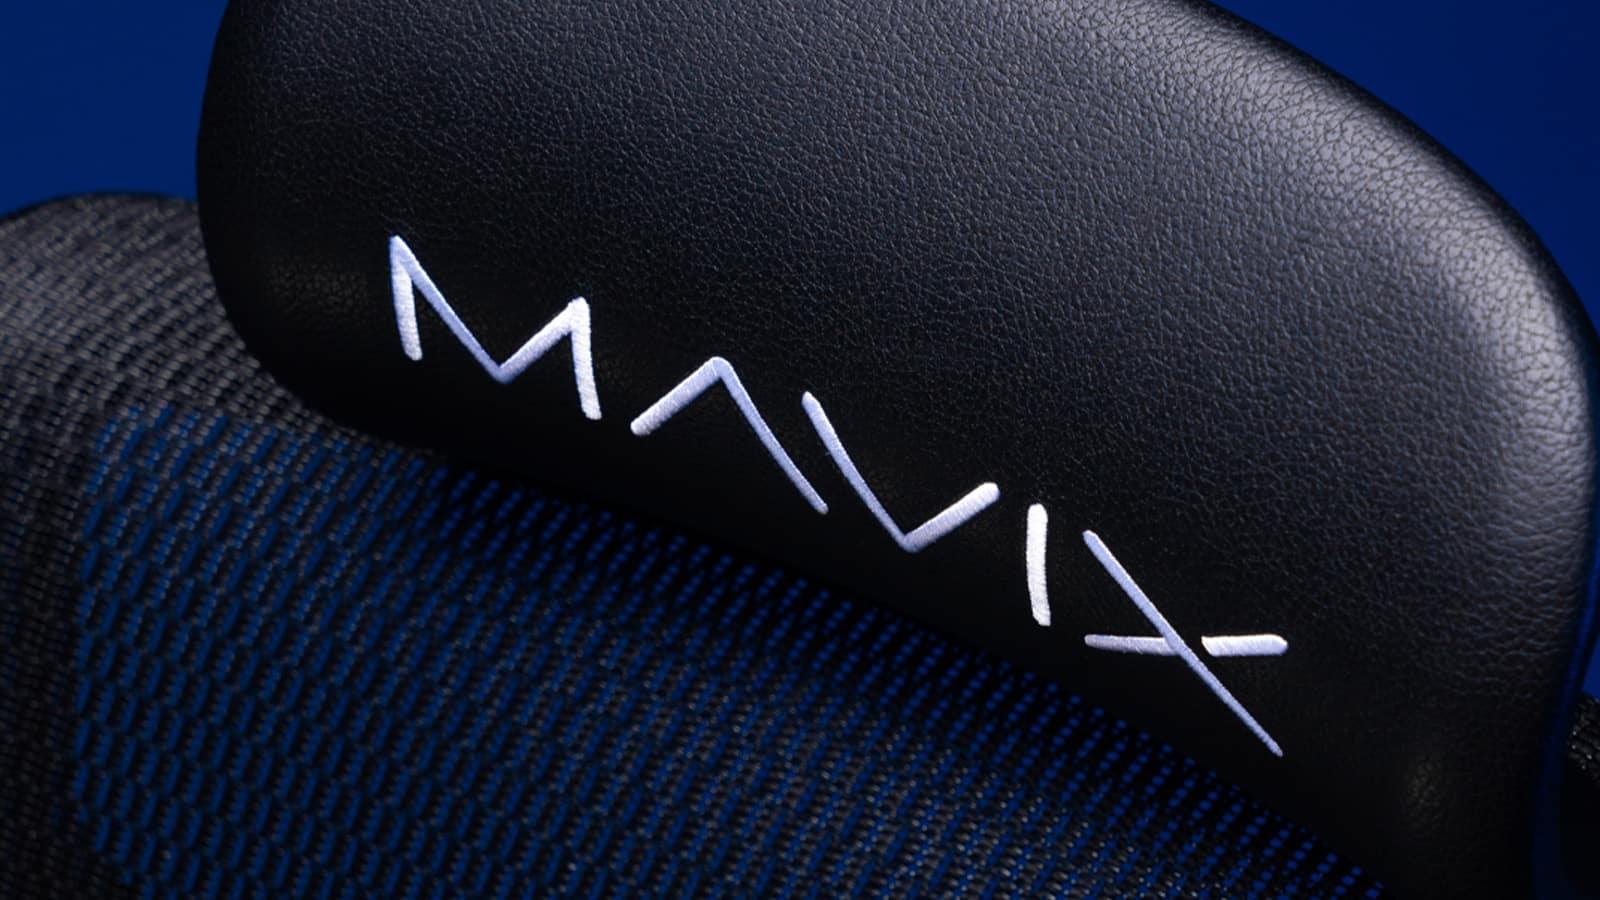 mavix M9 headrest with the brand name on it